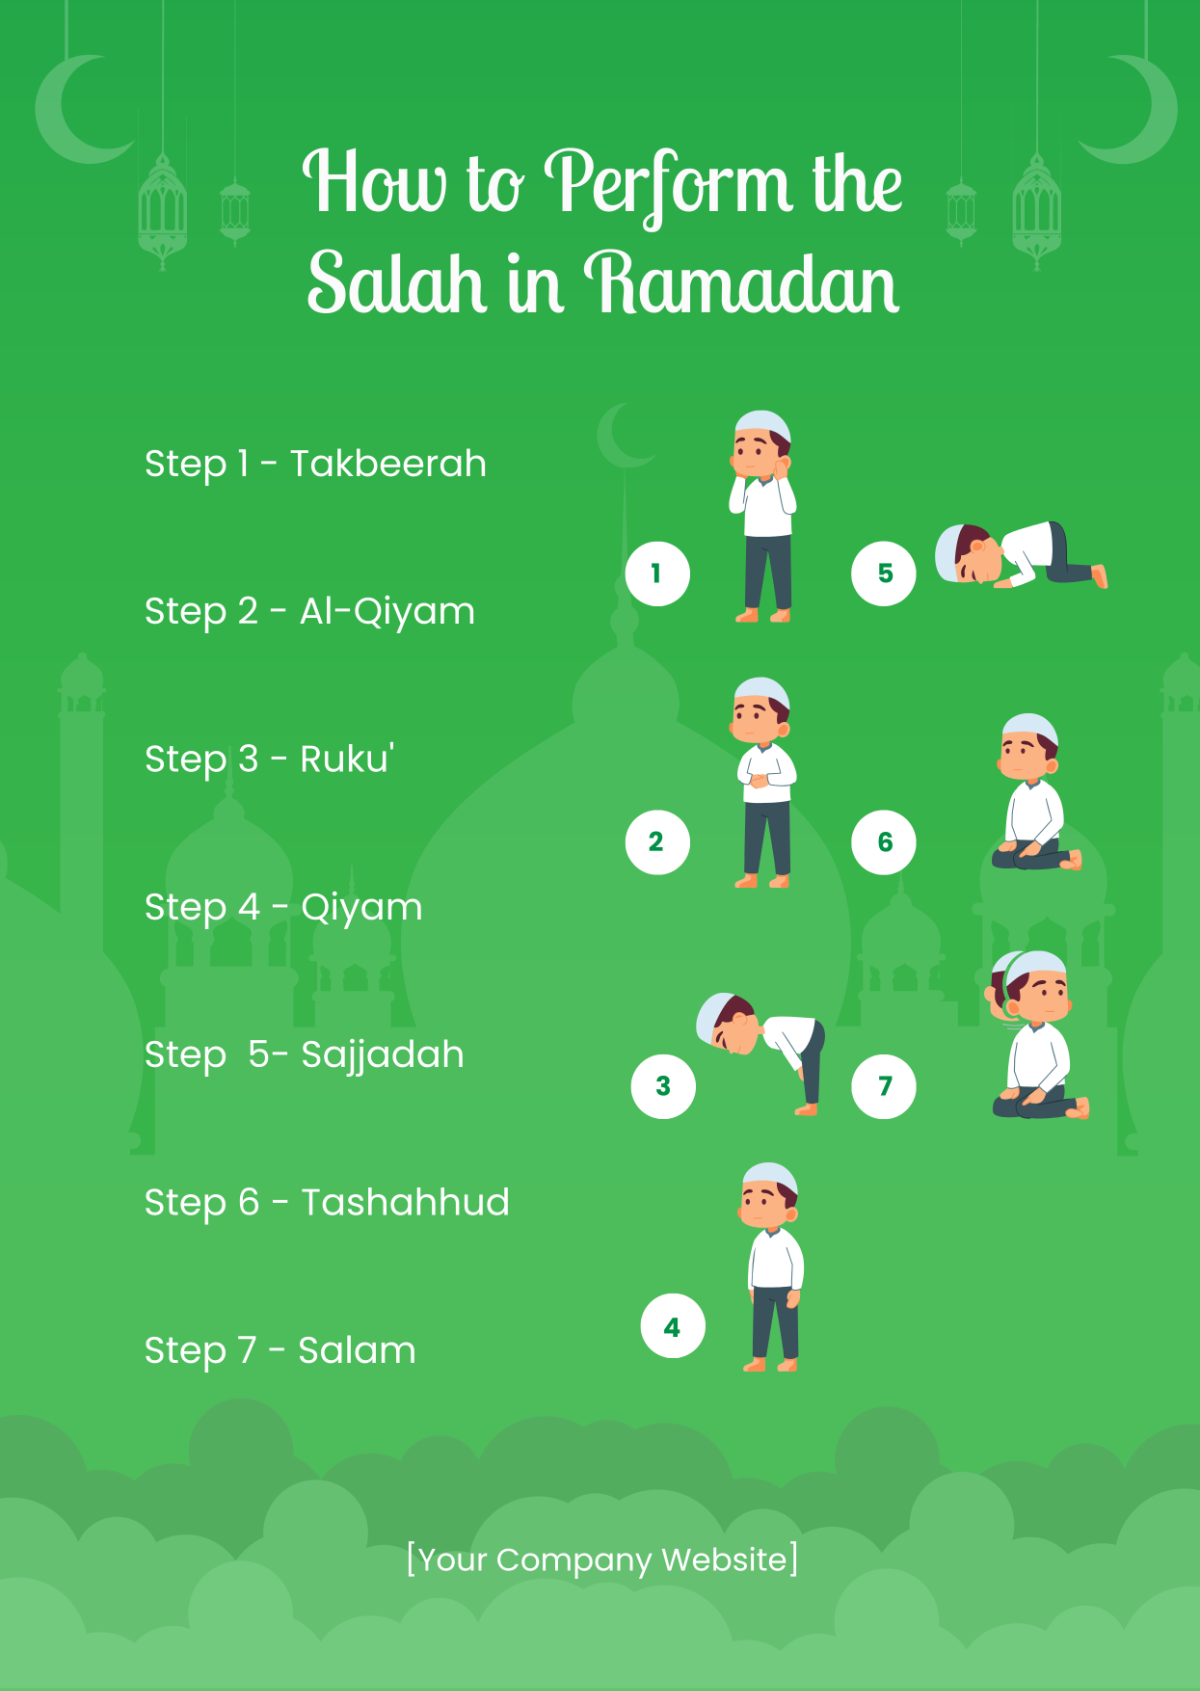 How to Perform the Salah in Ramadan